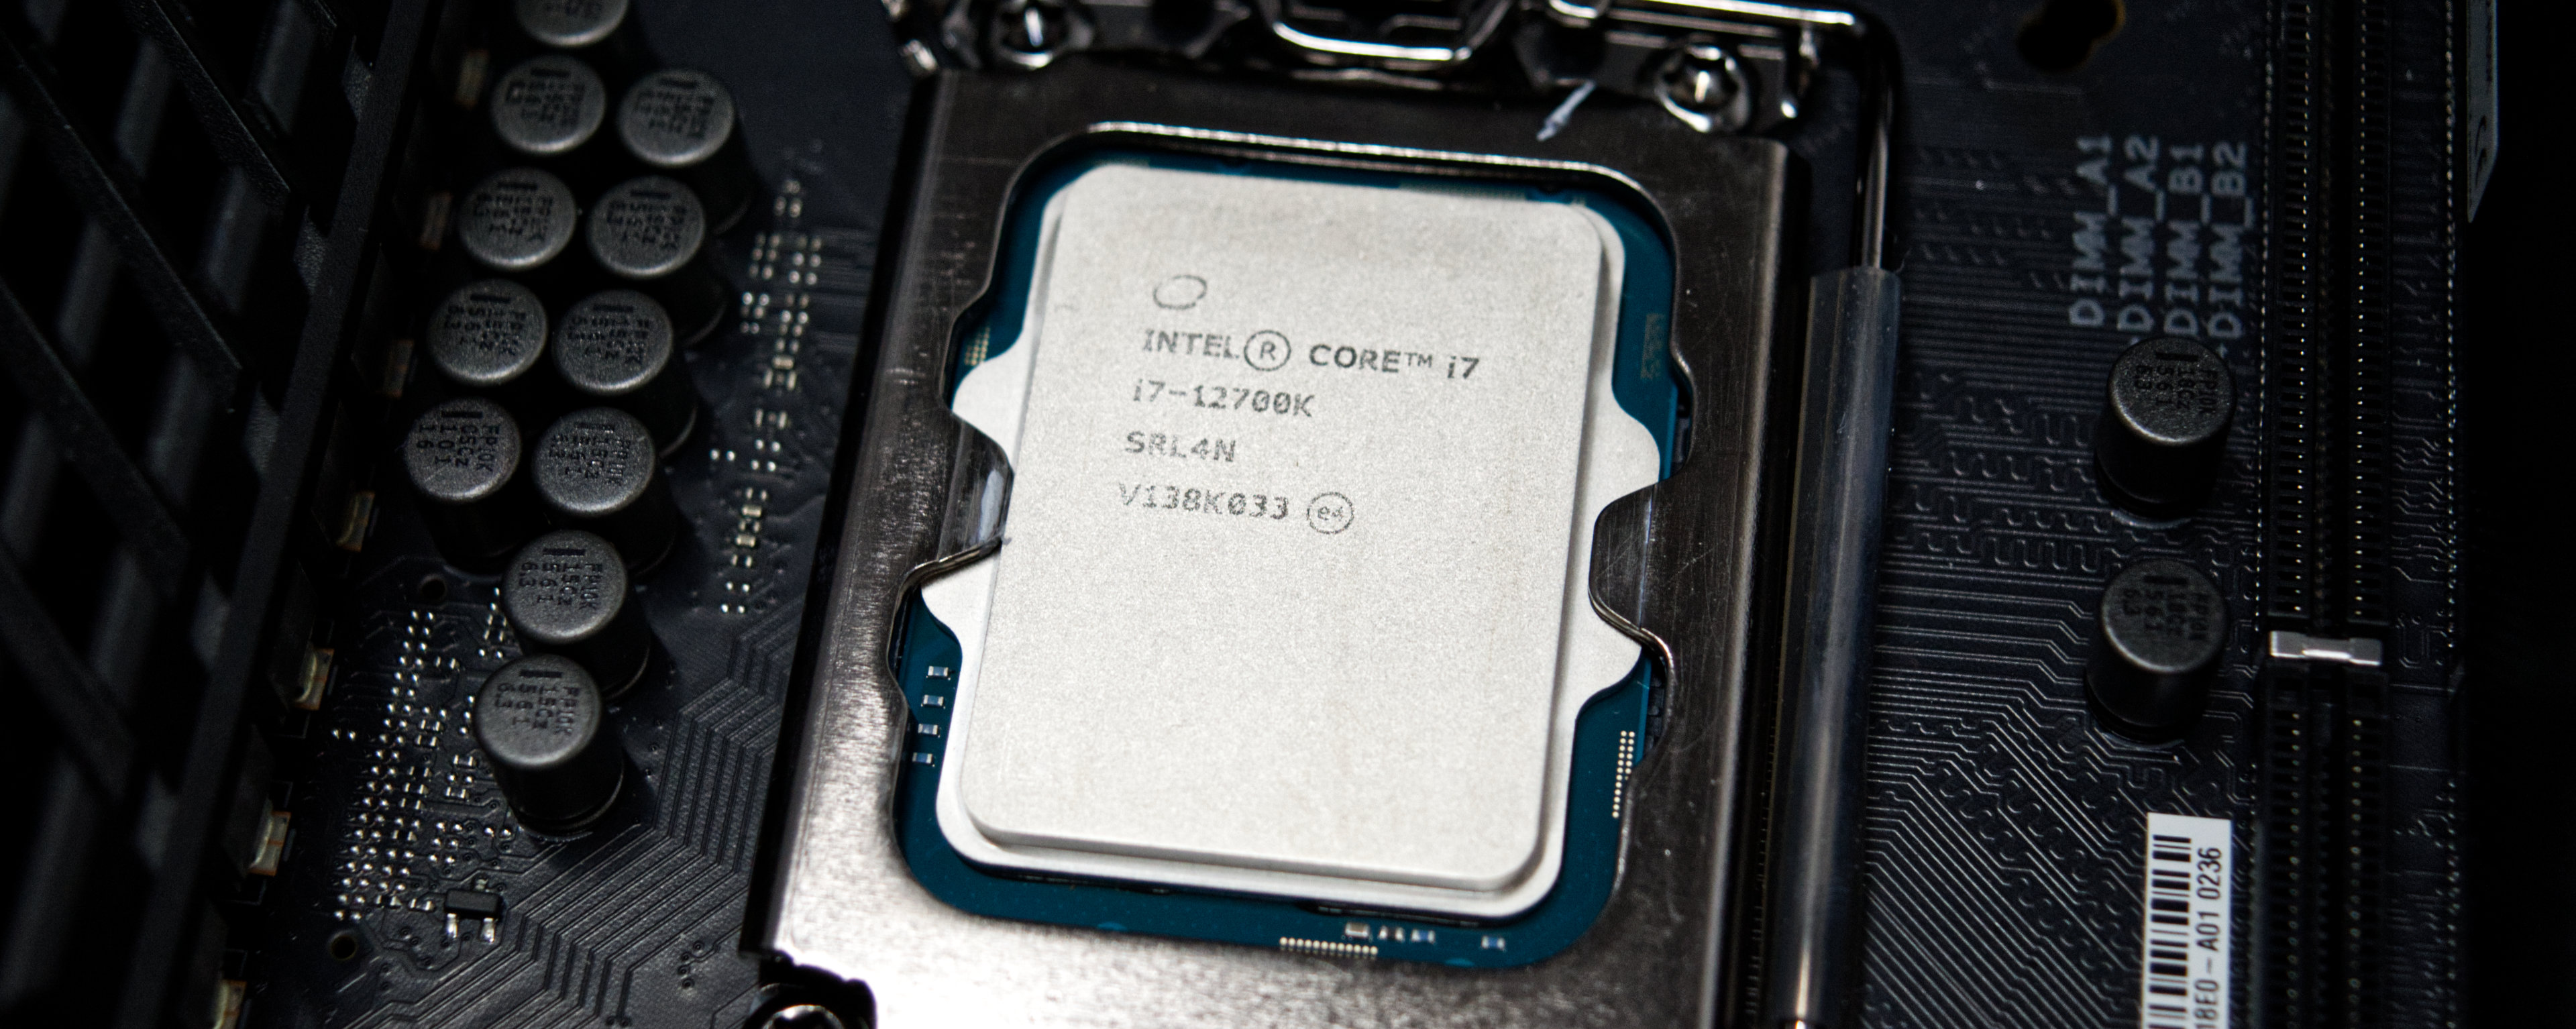 Intel Core i7-12700K Processor - Benchmarks and Specs - NotebookCheck.net  Tech